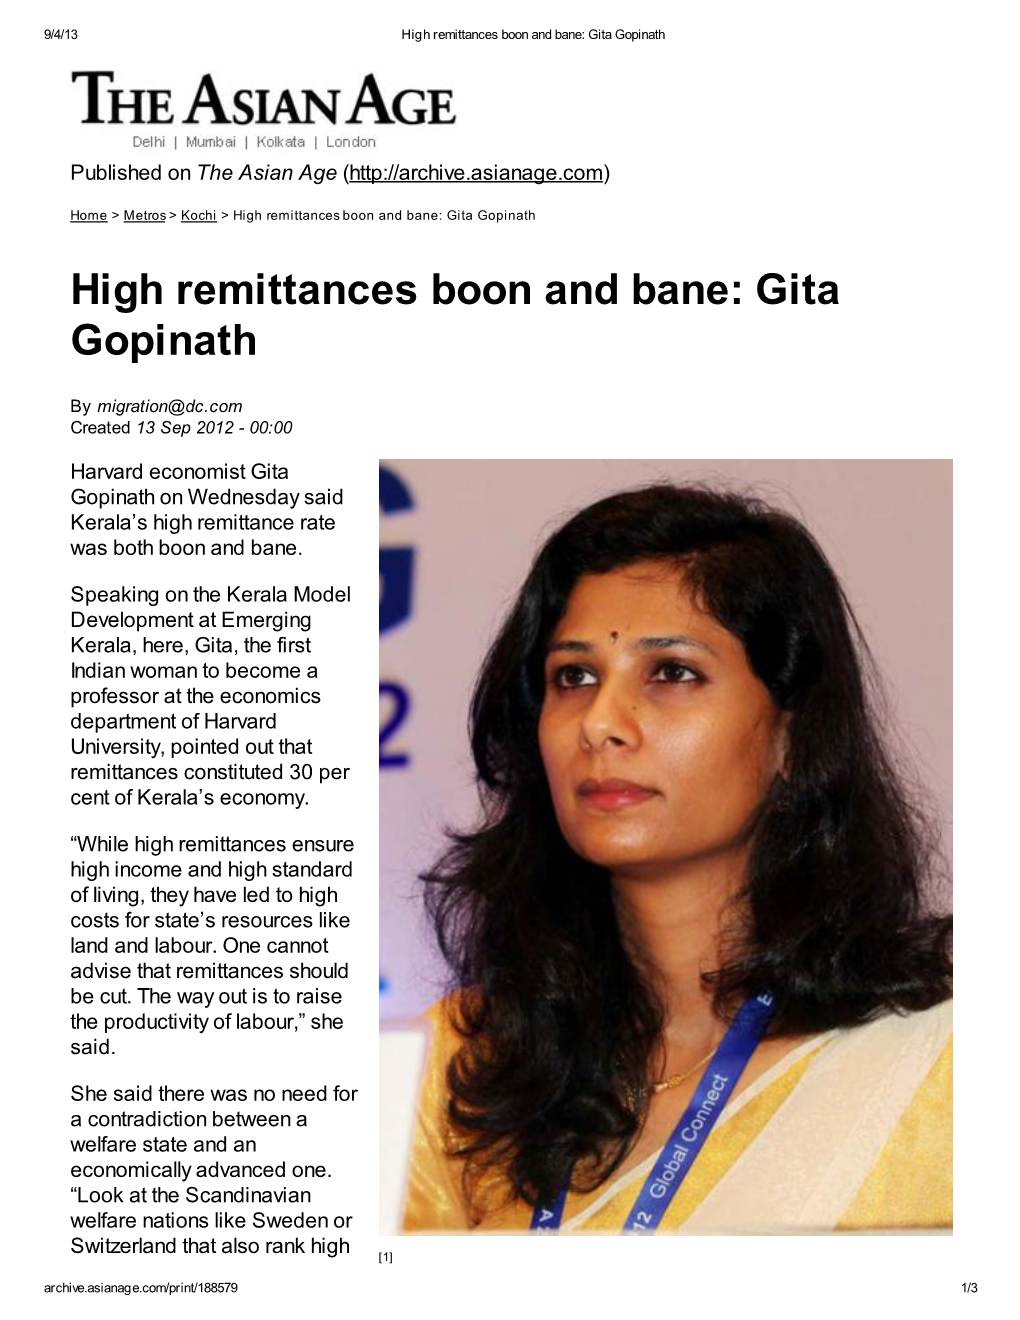 High Remittances Boon and Bane: Gita Gopinath